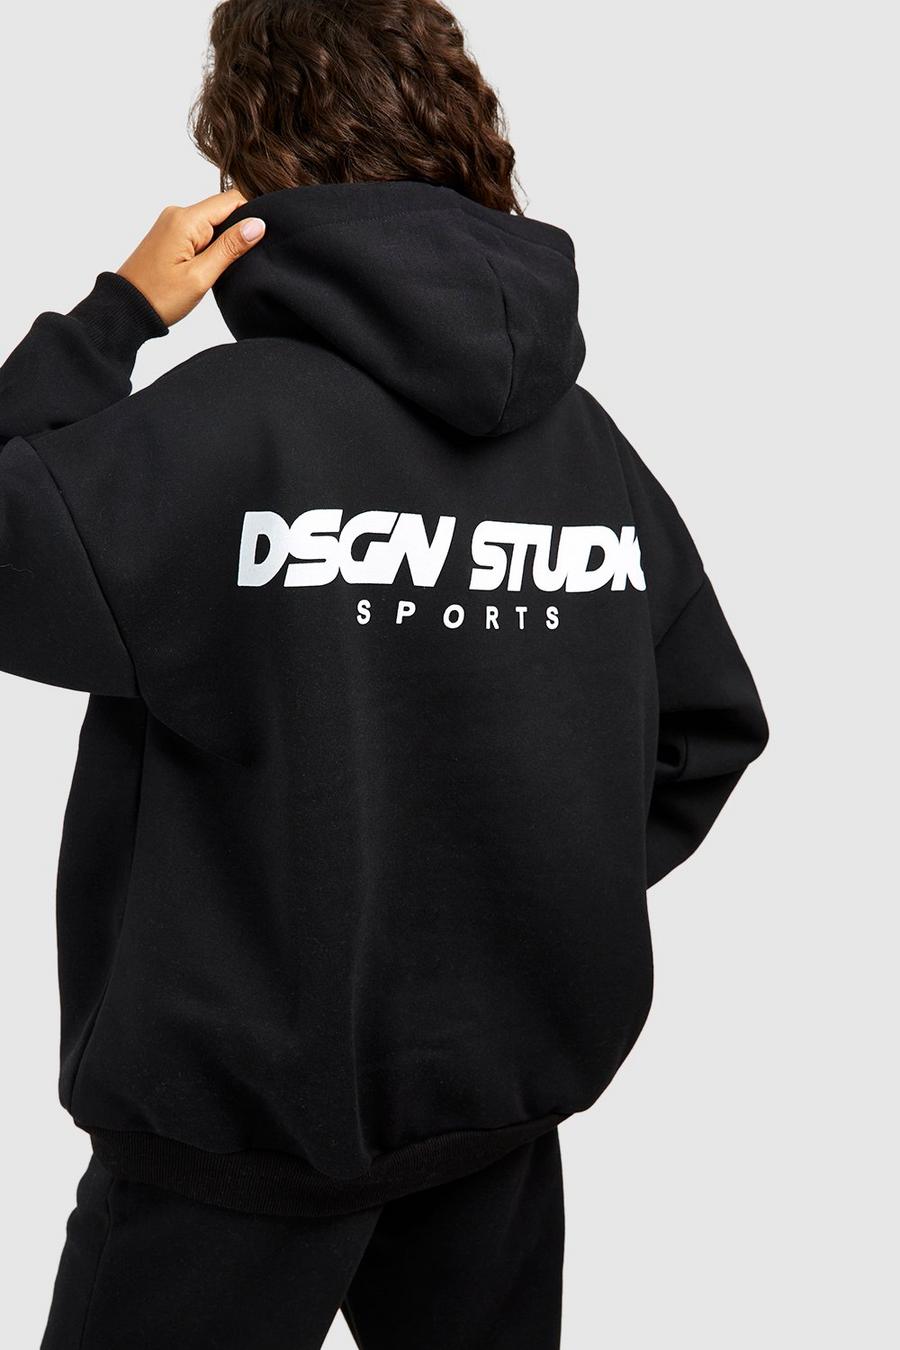 Black Dsgn Studio Sports Oversized Hoodie